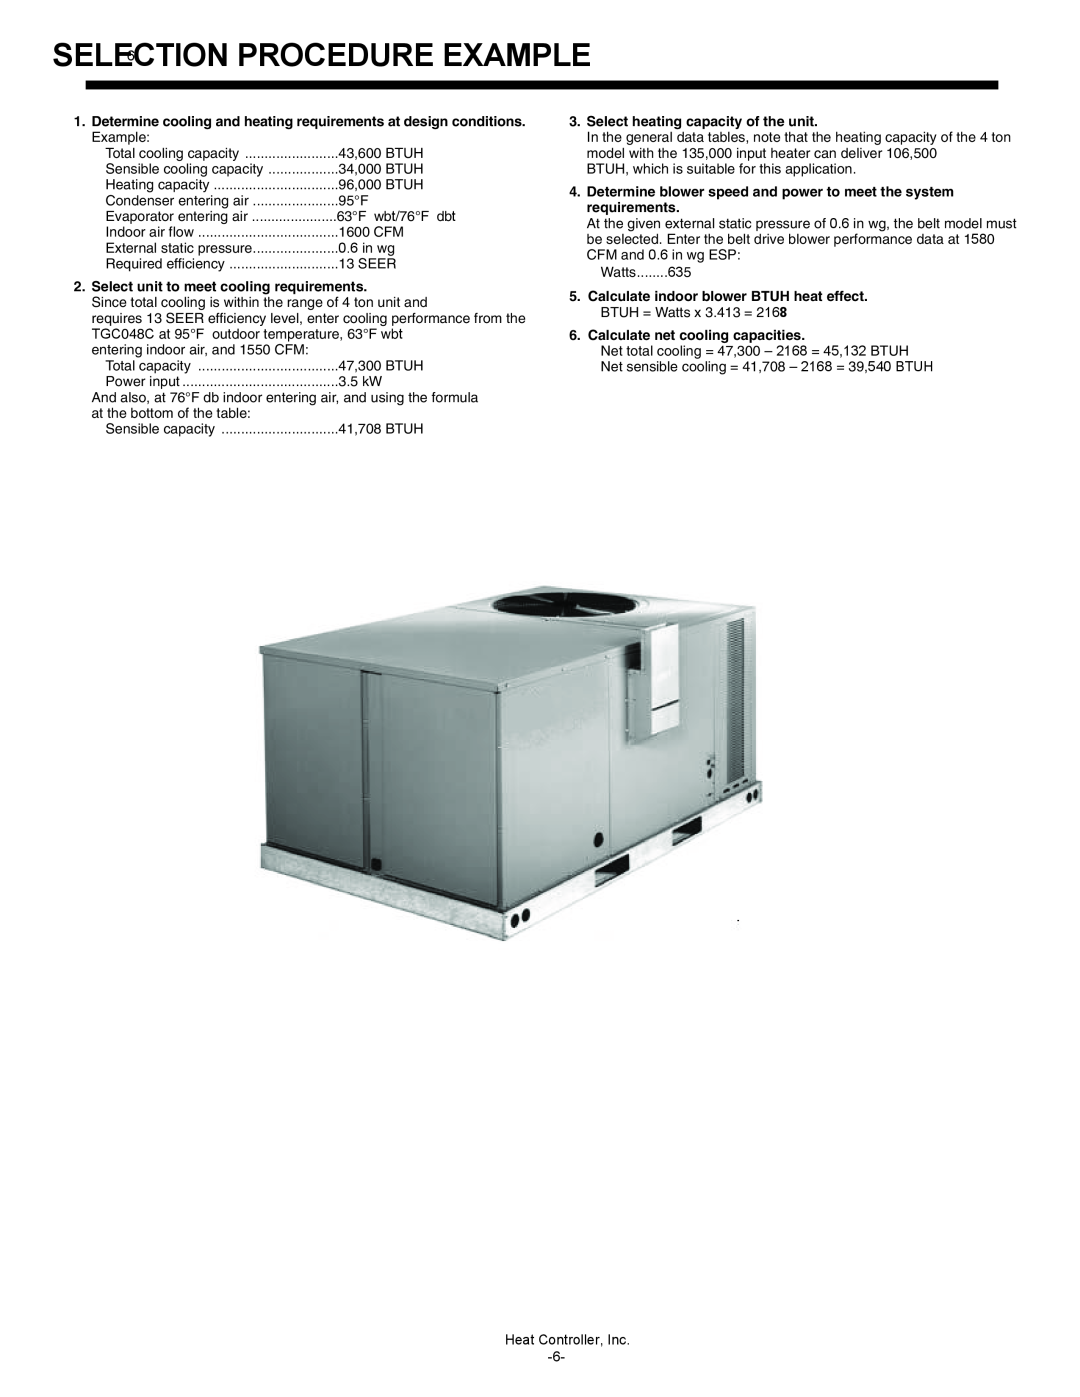 Heat Controller TGC042C-1K-120, TGC060C-4K-135 manual SELECTION6PROCEDURE EXAMPLE, Select unit to meet cooling requirements 